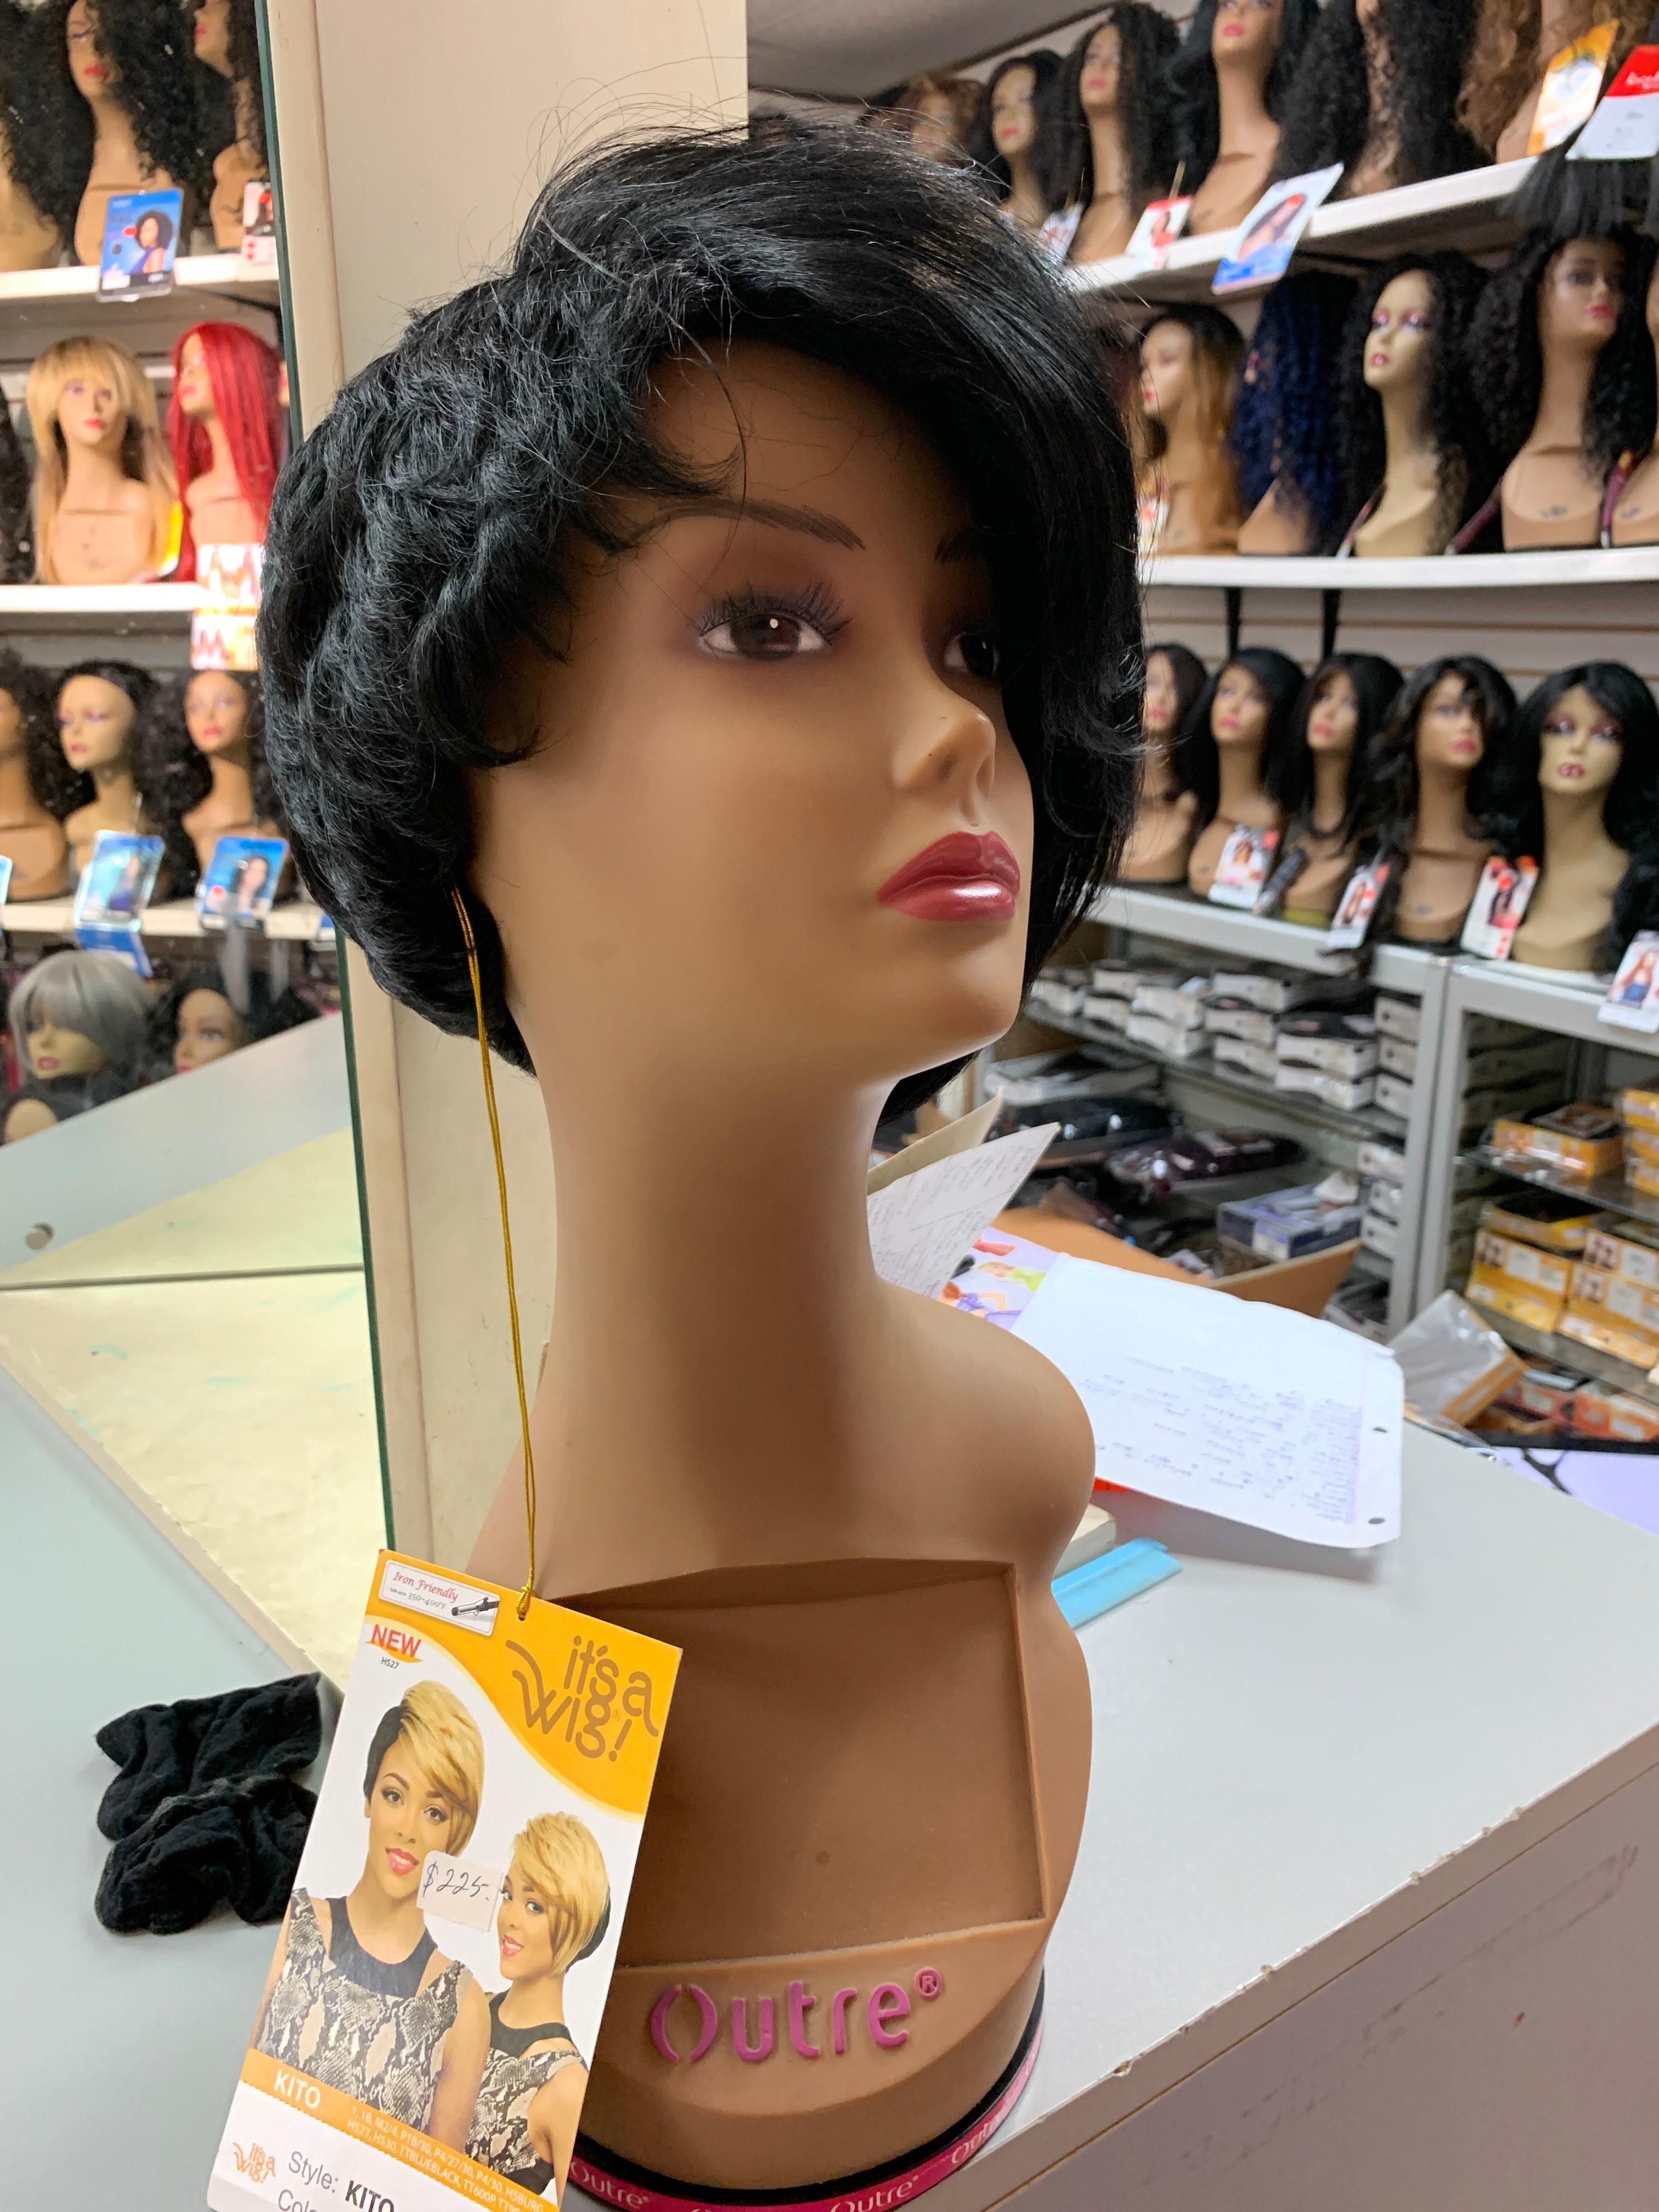 It’s a wig Kito